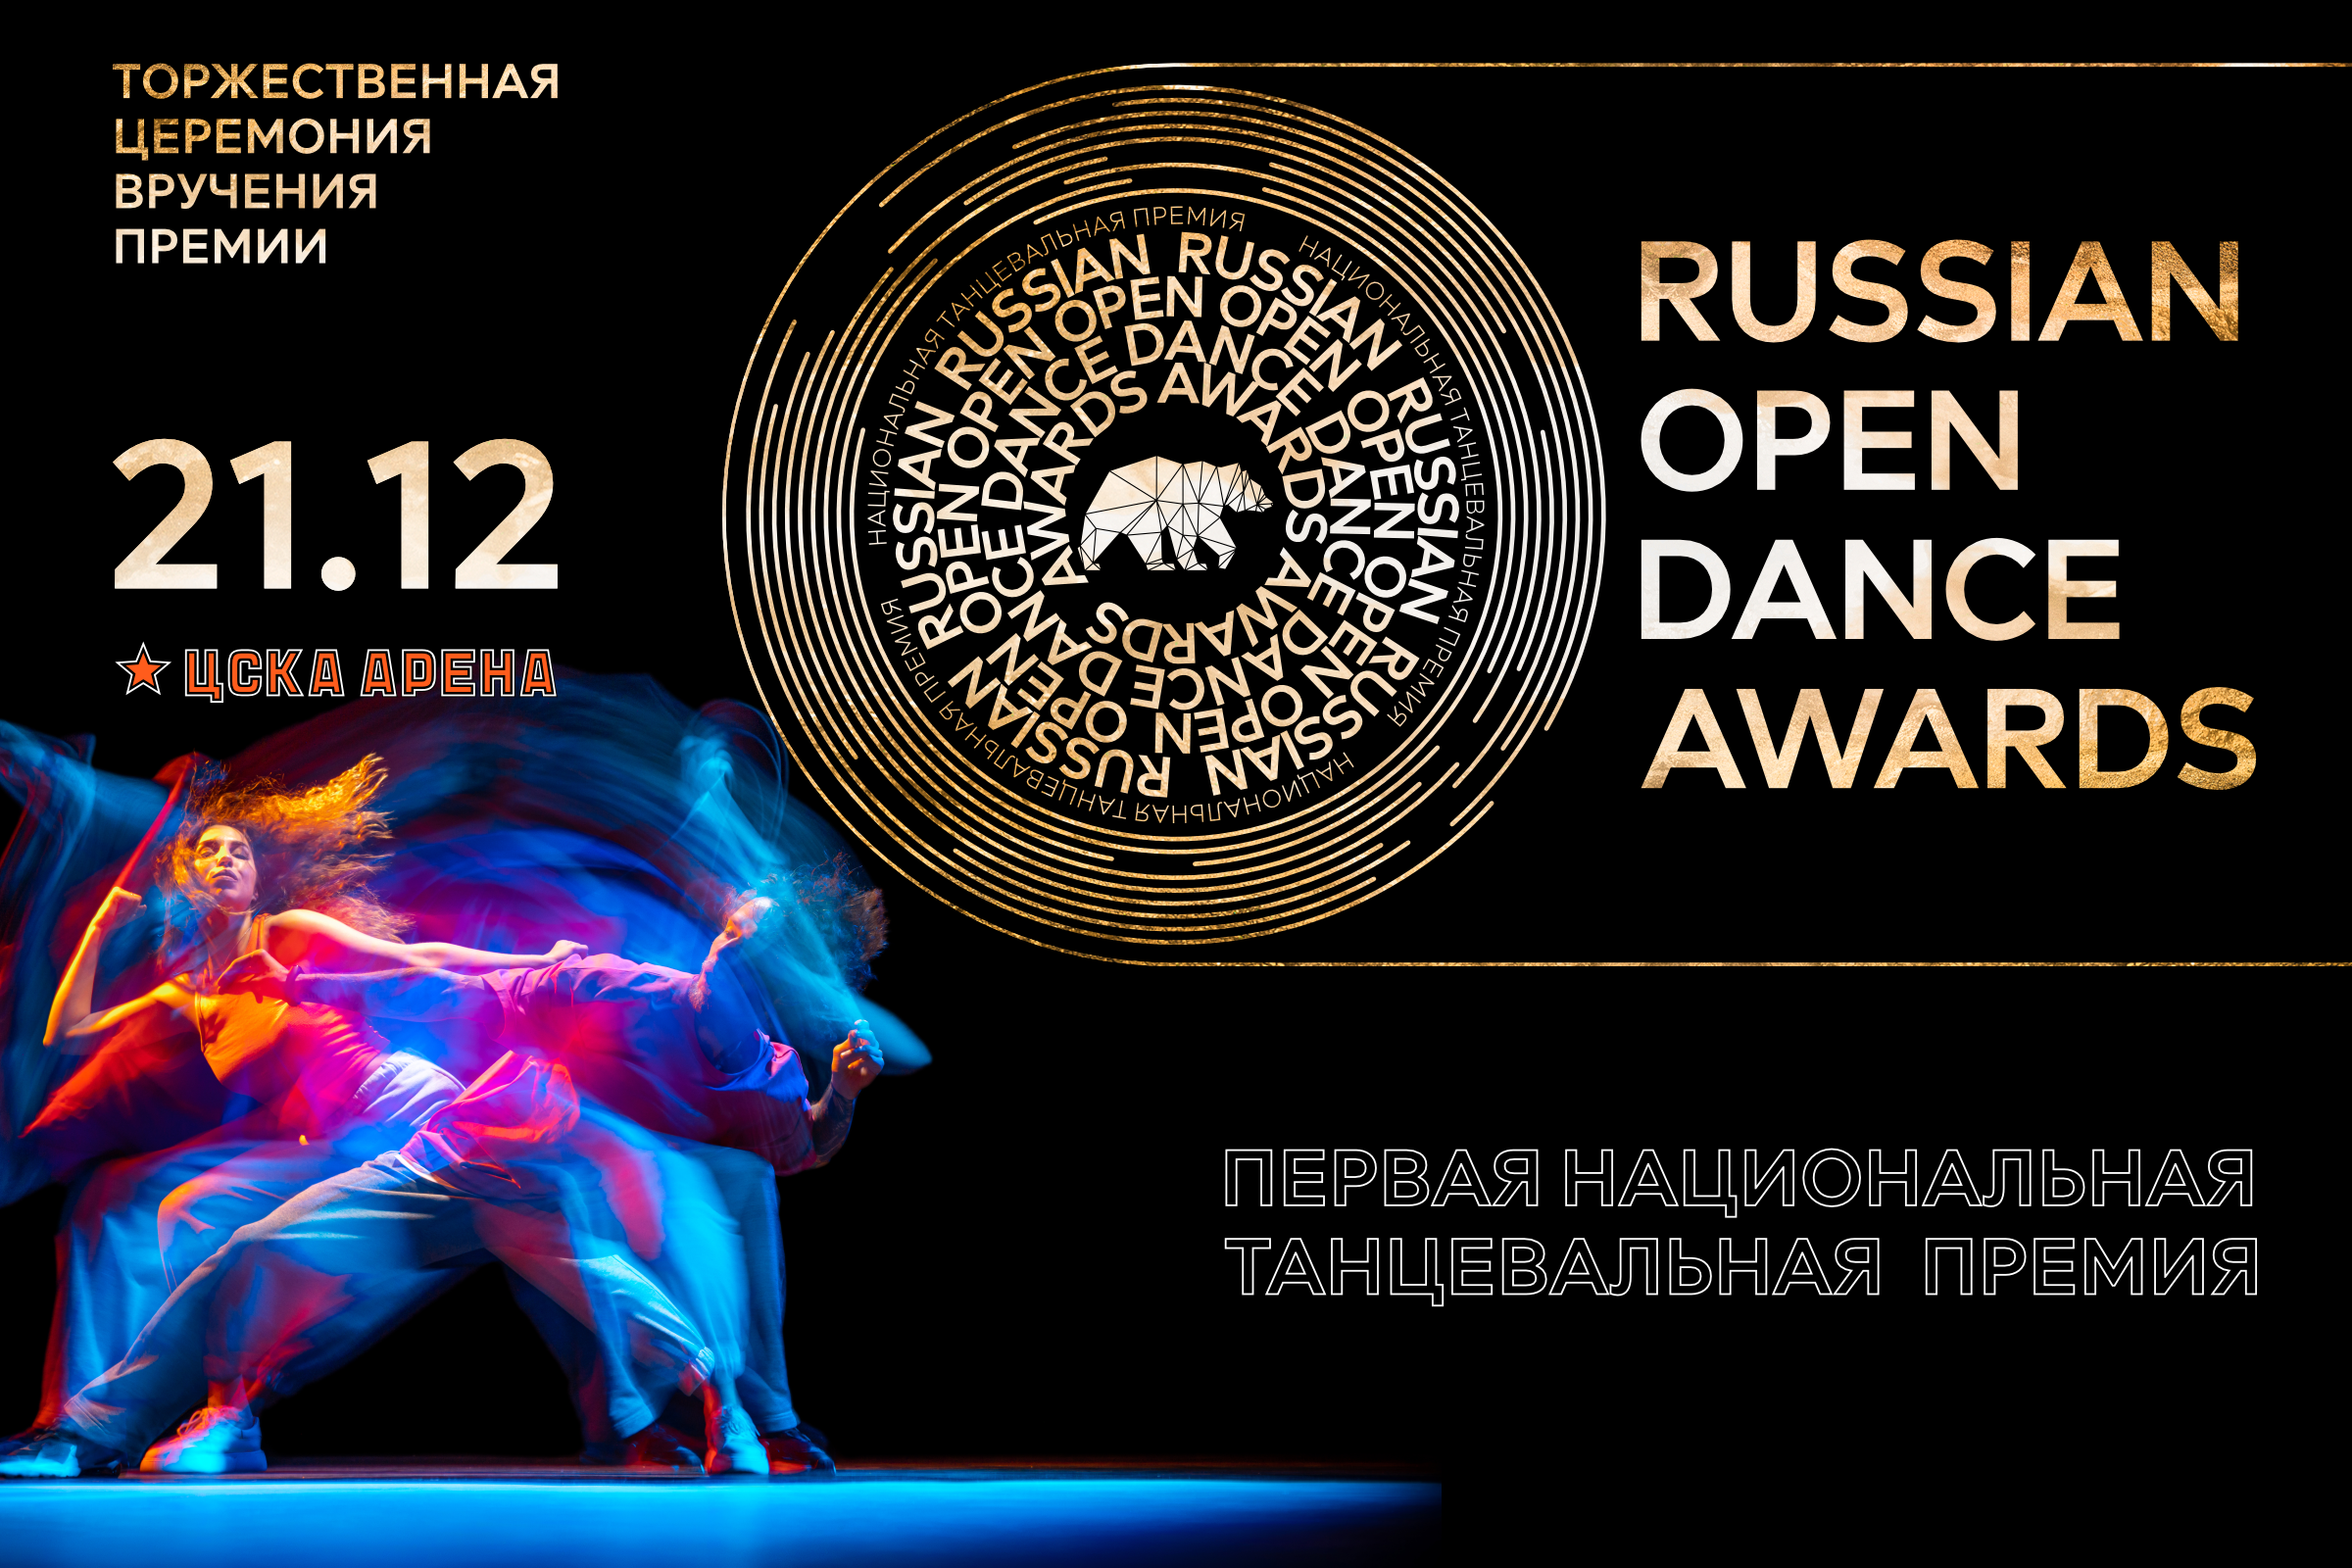 RUSSIAN OPEN DANCE AWARDS